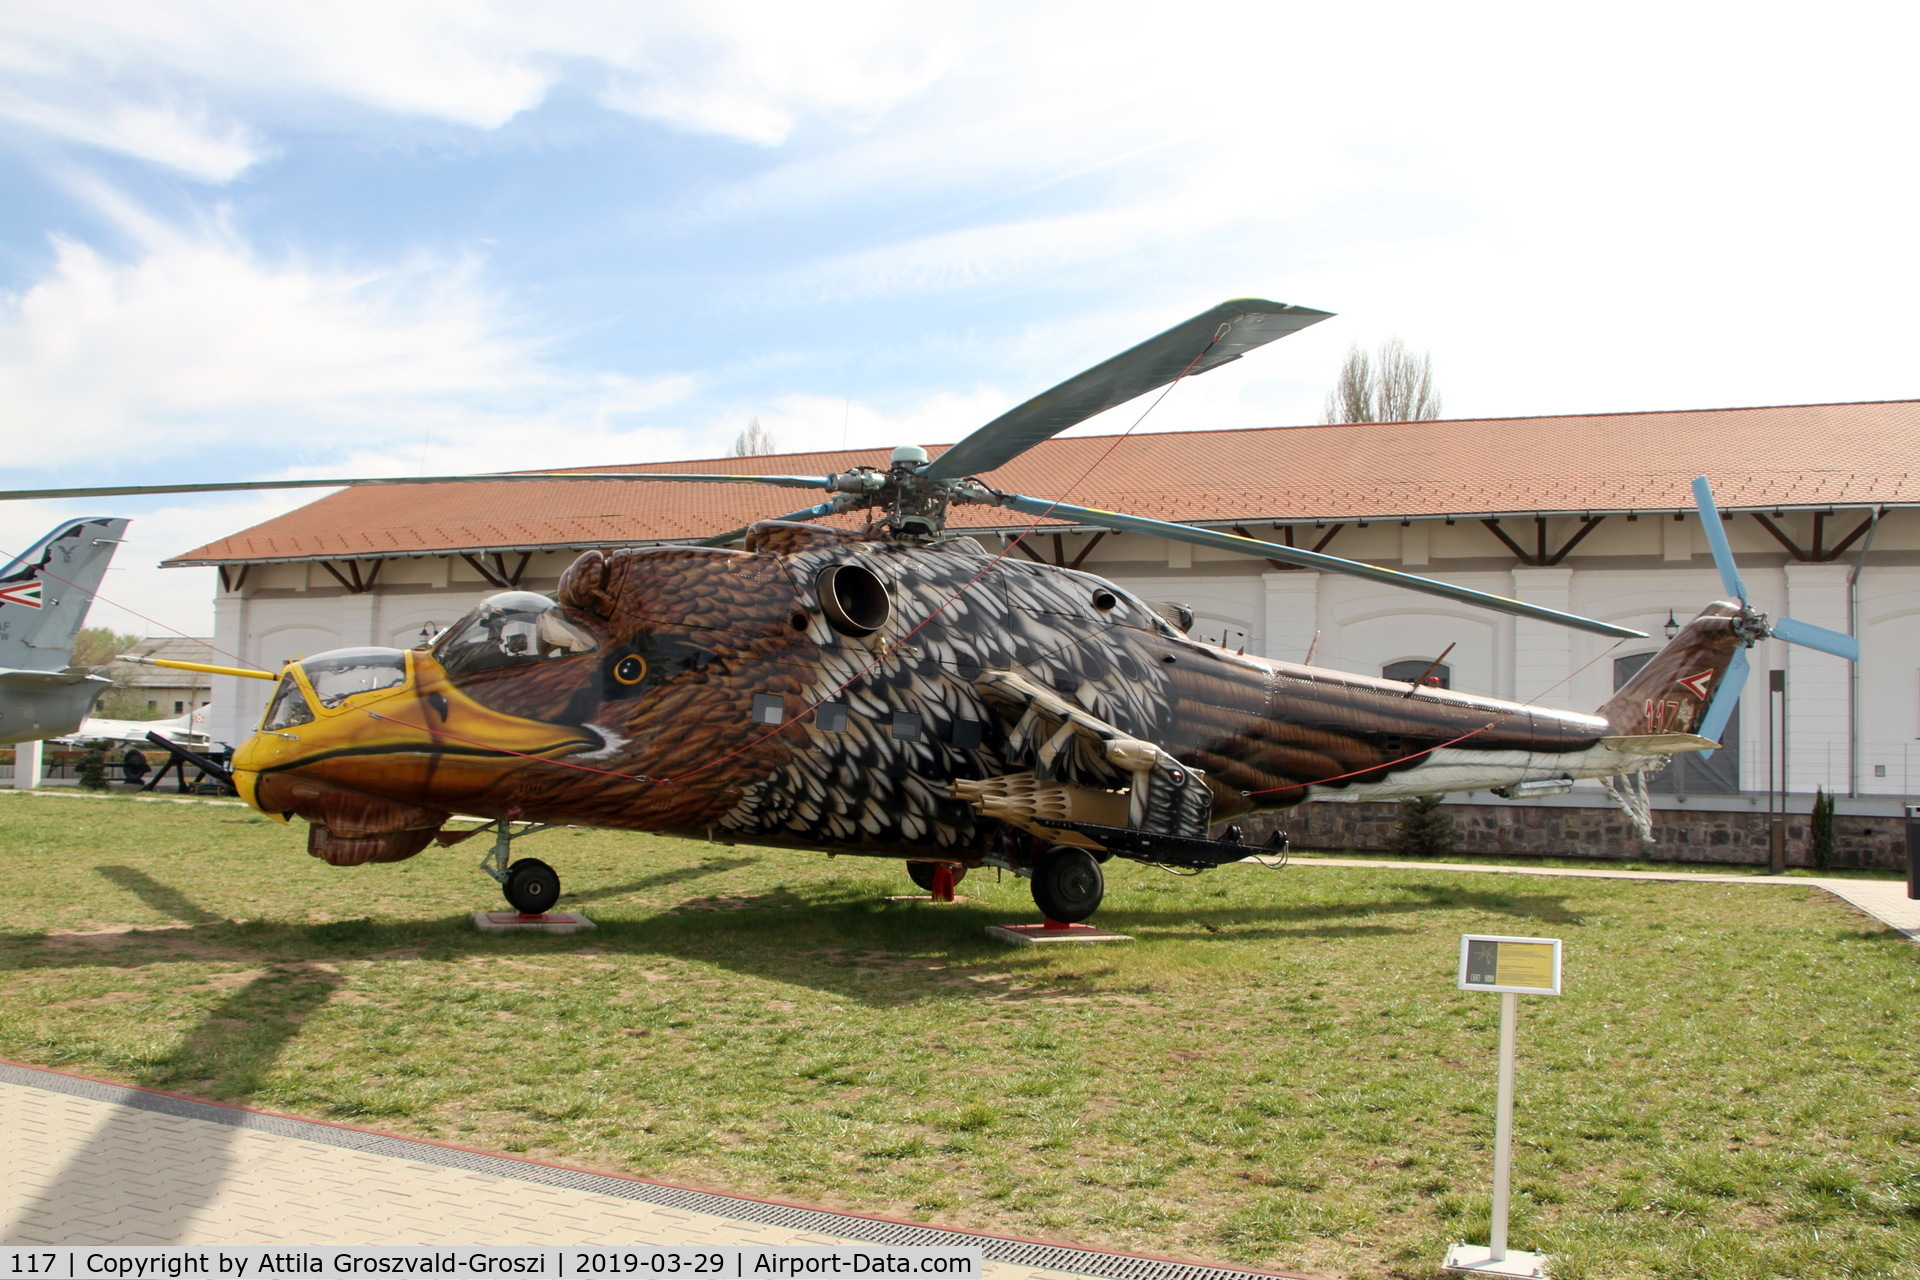 117, 1980 Mil Mi-24D Hind D C/N K20117, RepTár. Szolnok aviation history museum, Hungary